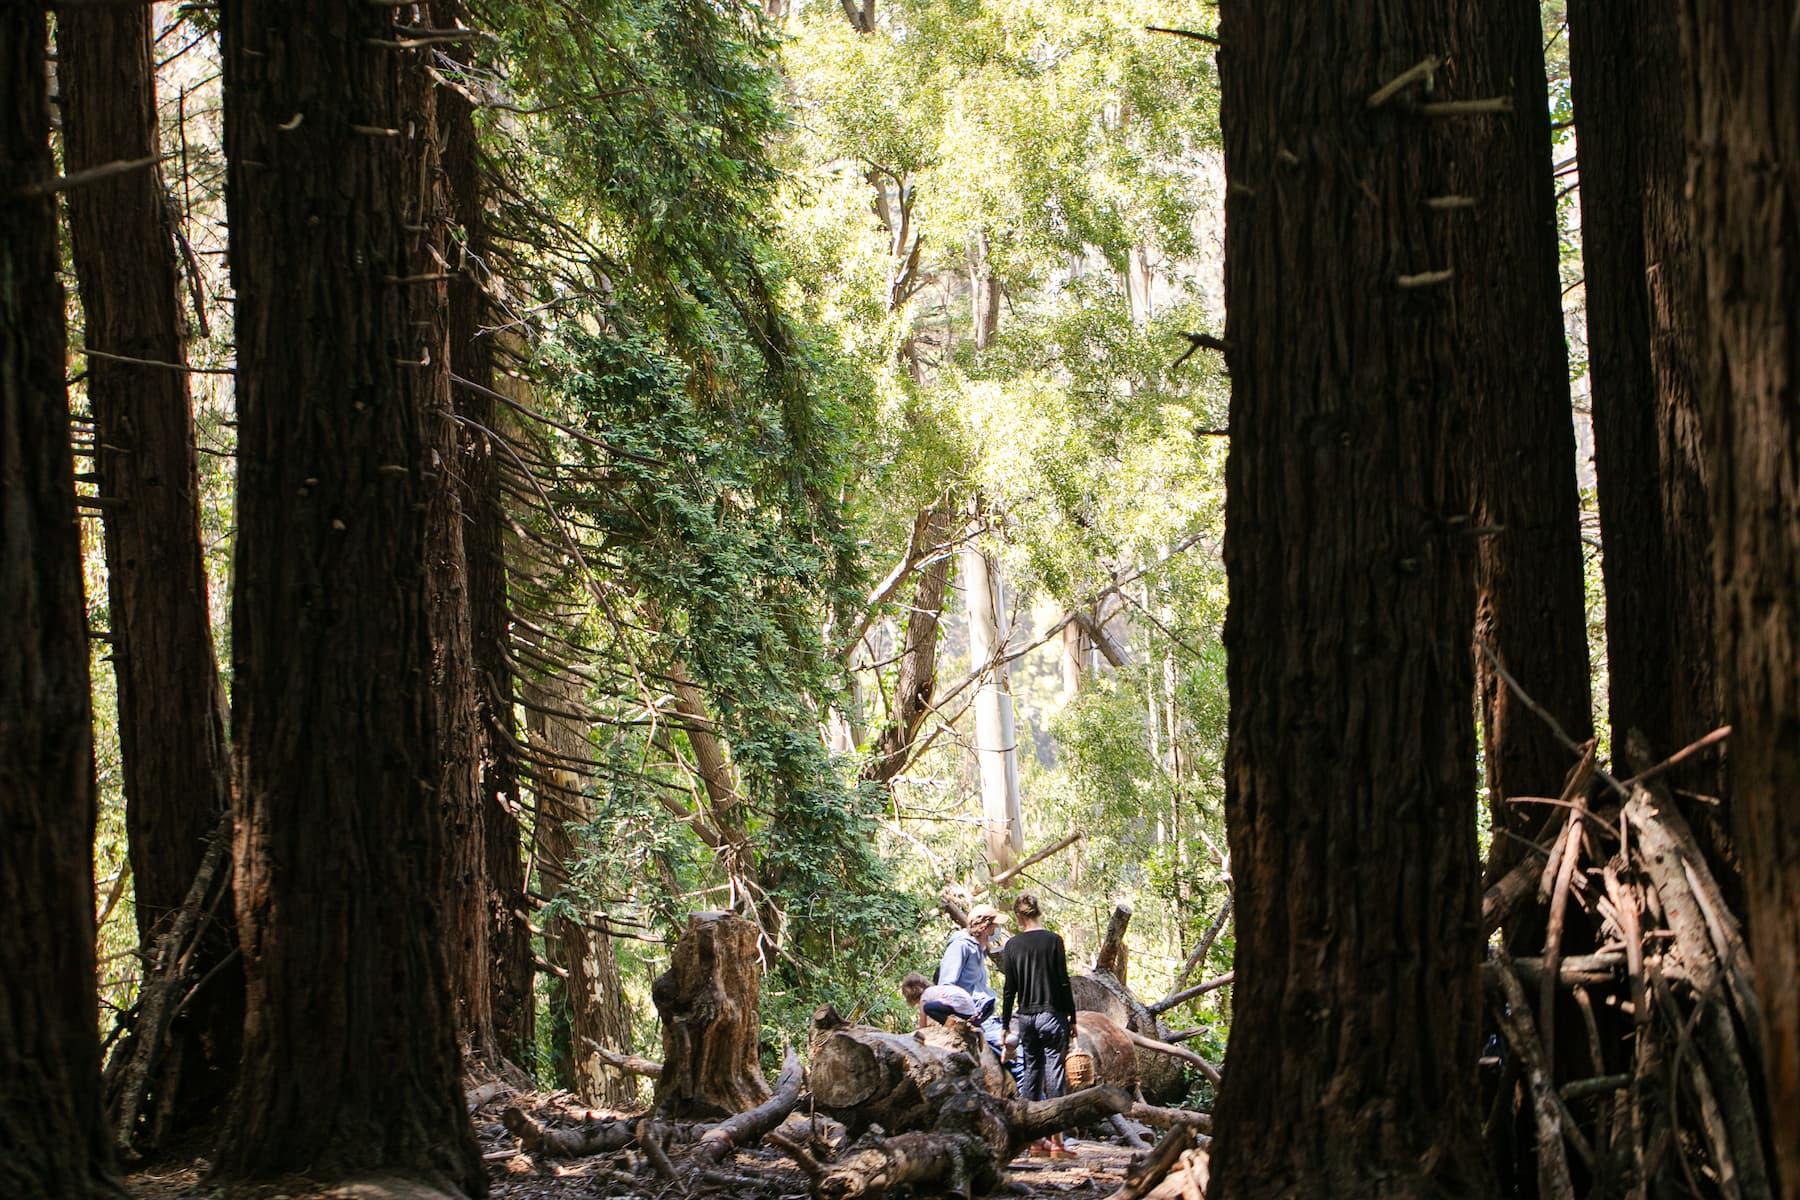 Visitors exploring redwoods in the Presidio. Photo by Myleen Hollero.